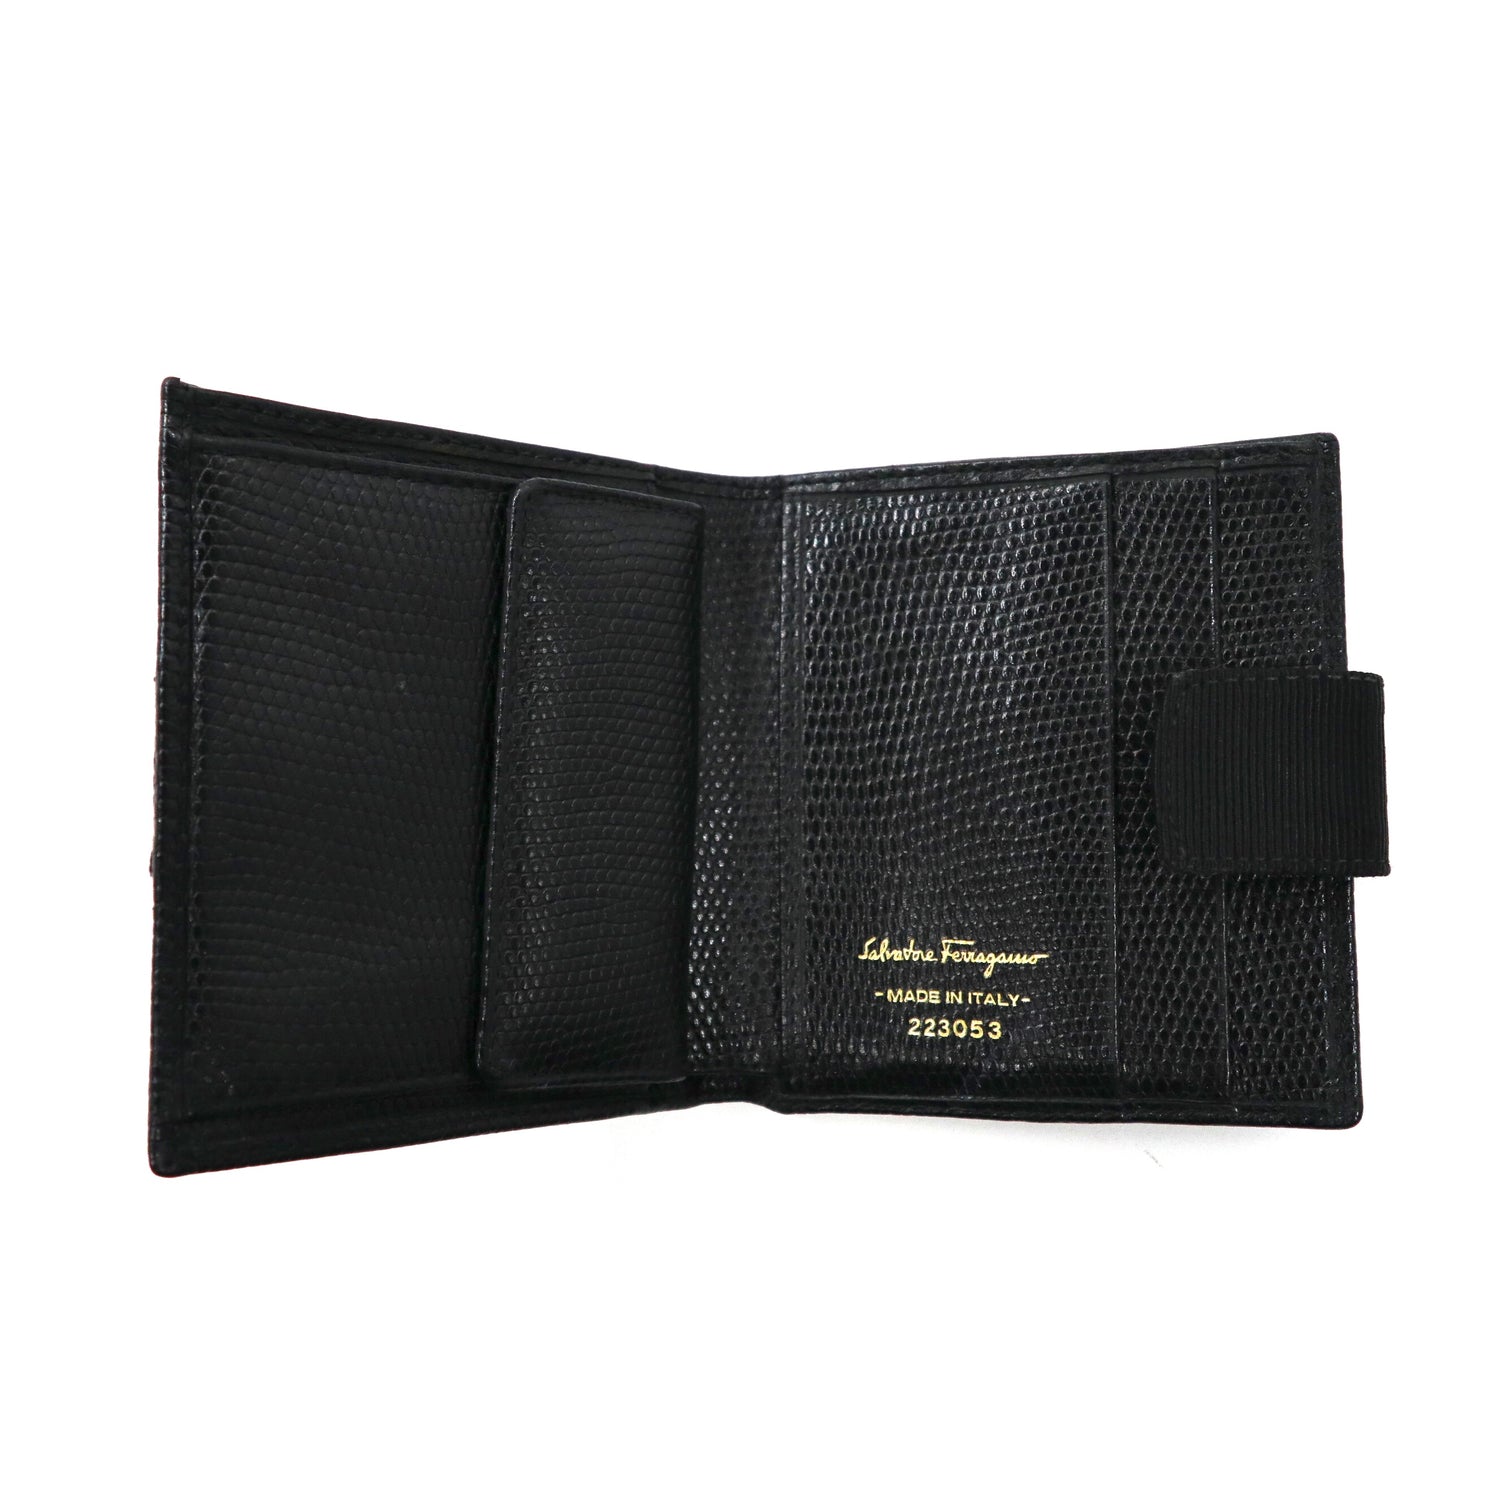 Salvatore Ferragamo 2 -fold wallet Black leather embossed Vala